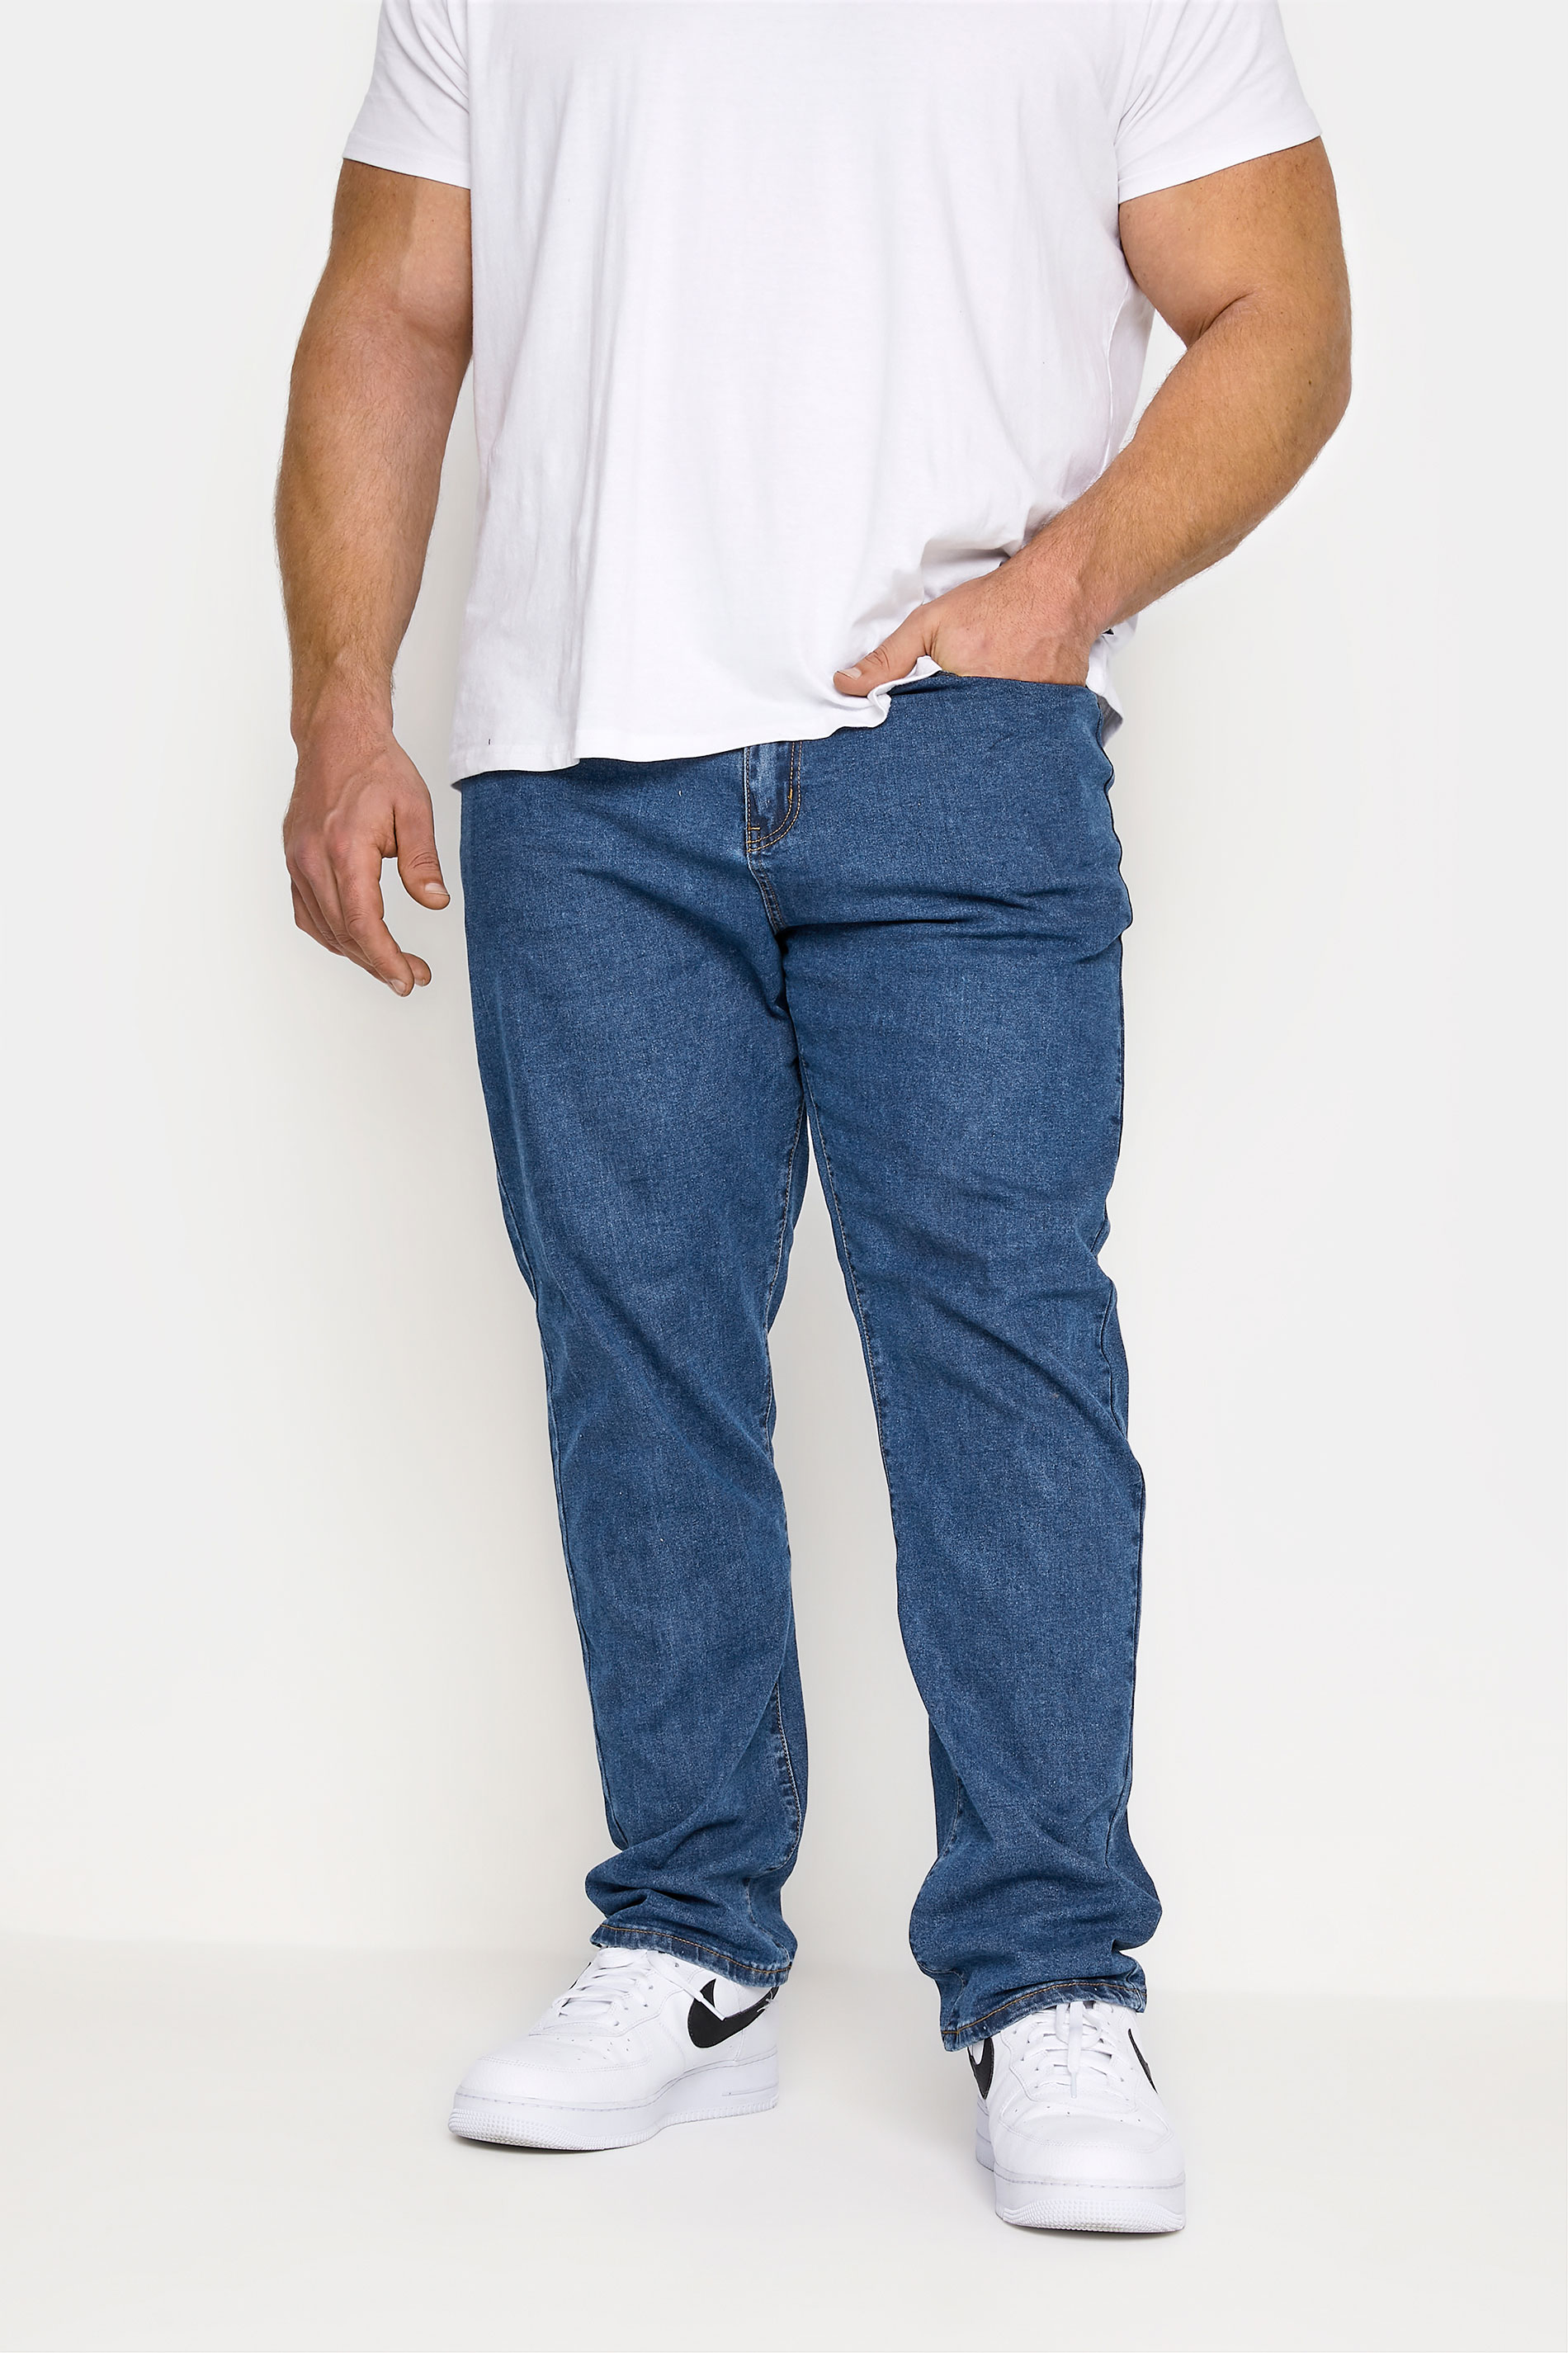 Image of Inside Leg Size 29", Waist Size 42 Mens Kam Big & Tall Blue Regular Fit Stretch Jeans Big & Tall